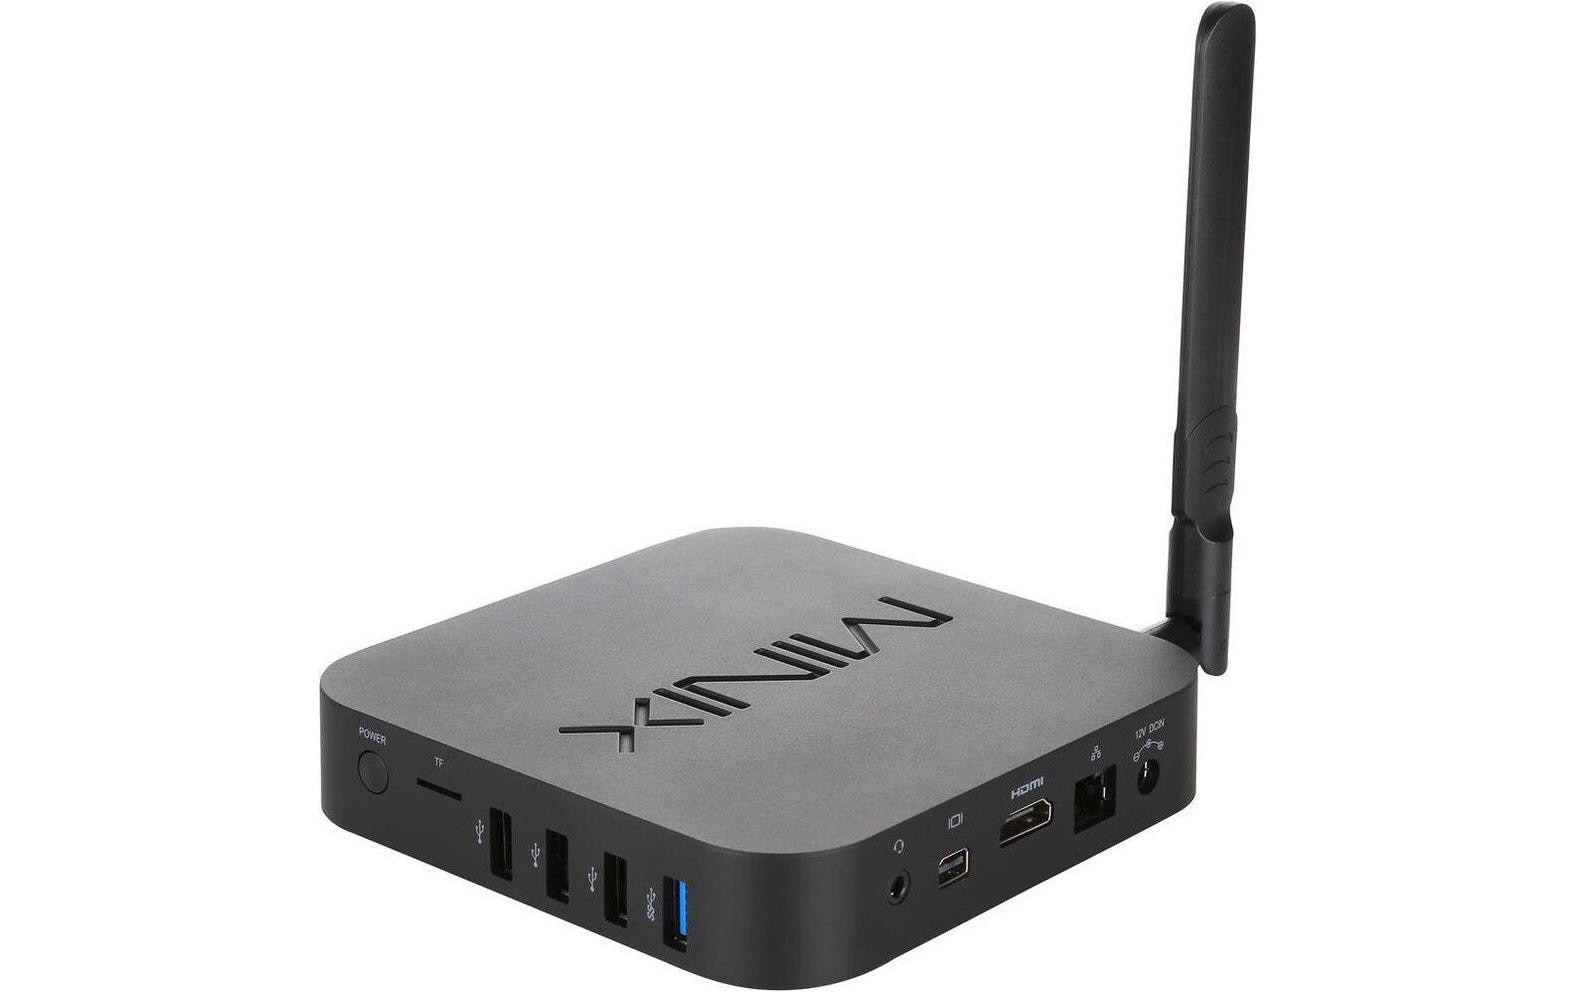 Minix Mediaplayer / IPTV Player NEO Z83-4 Max Windows 10 Pro